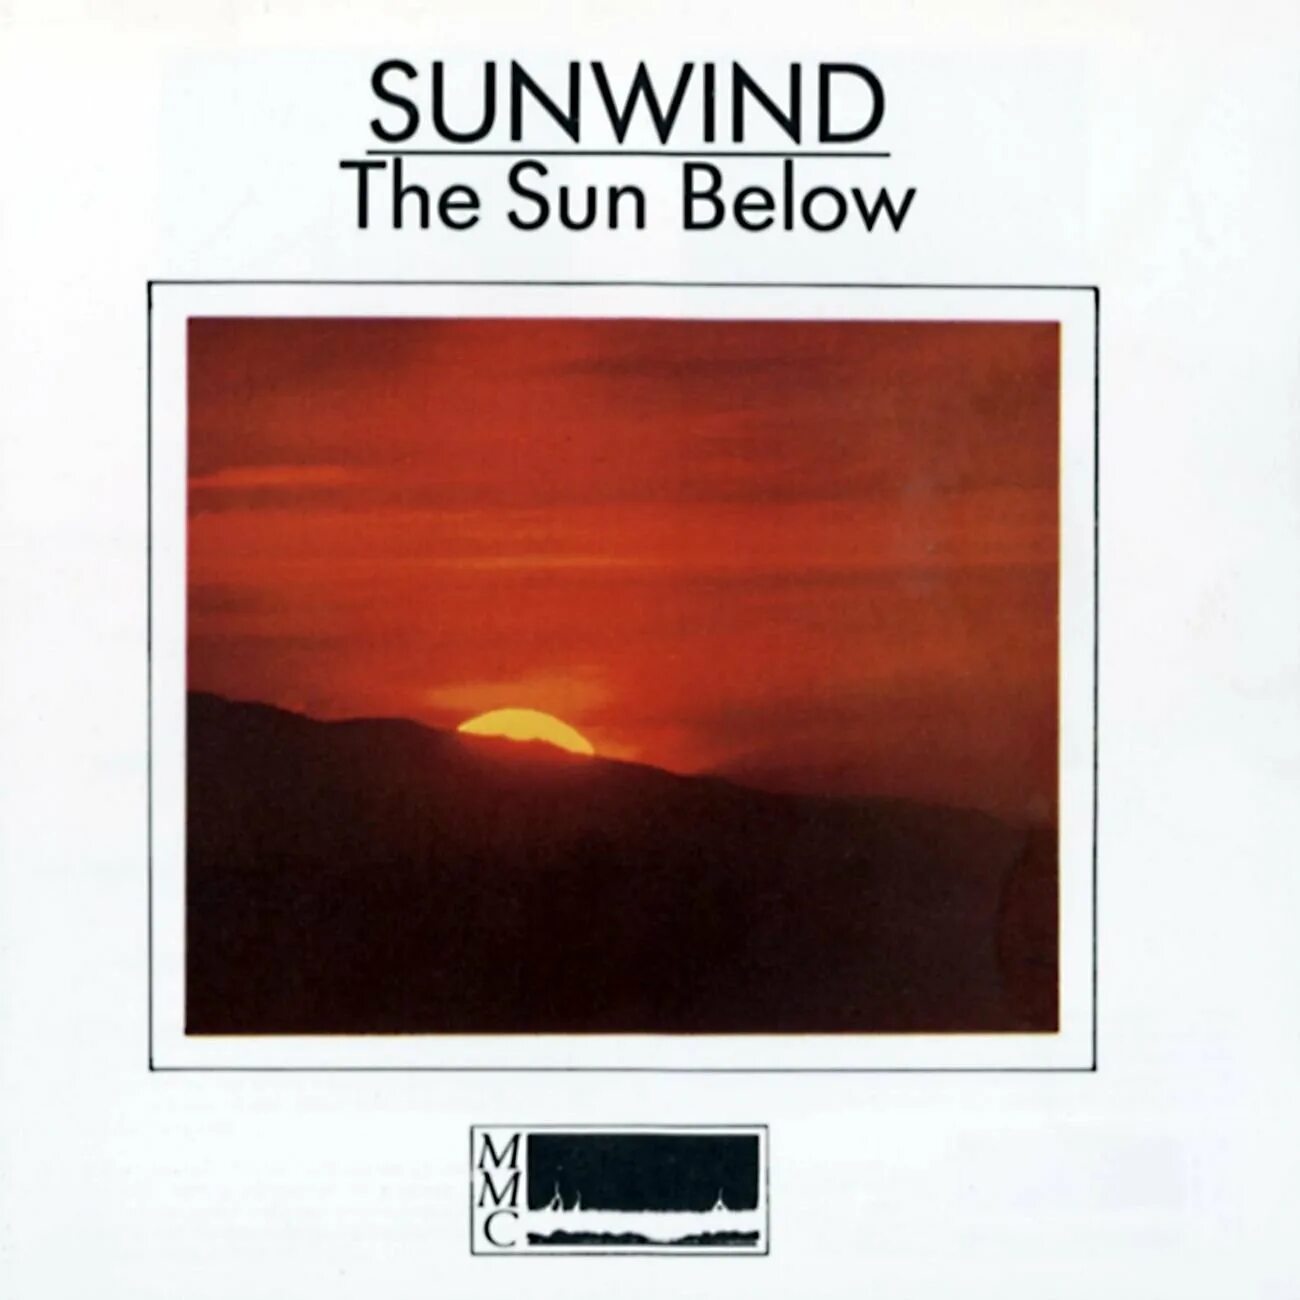 Телевизор sunwind отзывы. Below the Sun. Below the Sun группа. Sunwind группа.